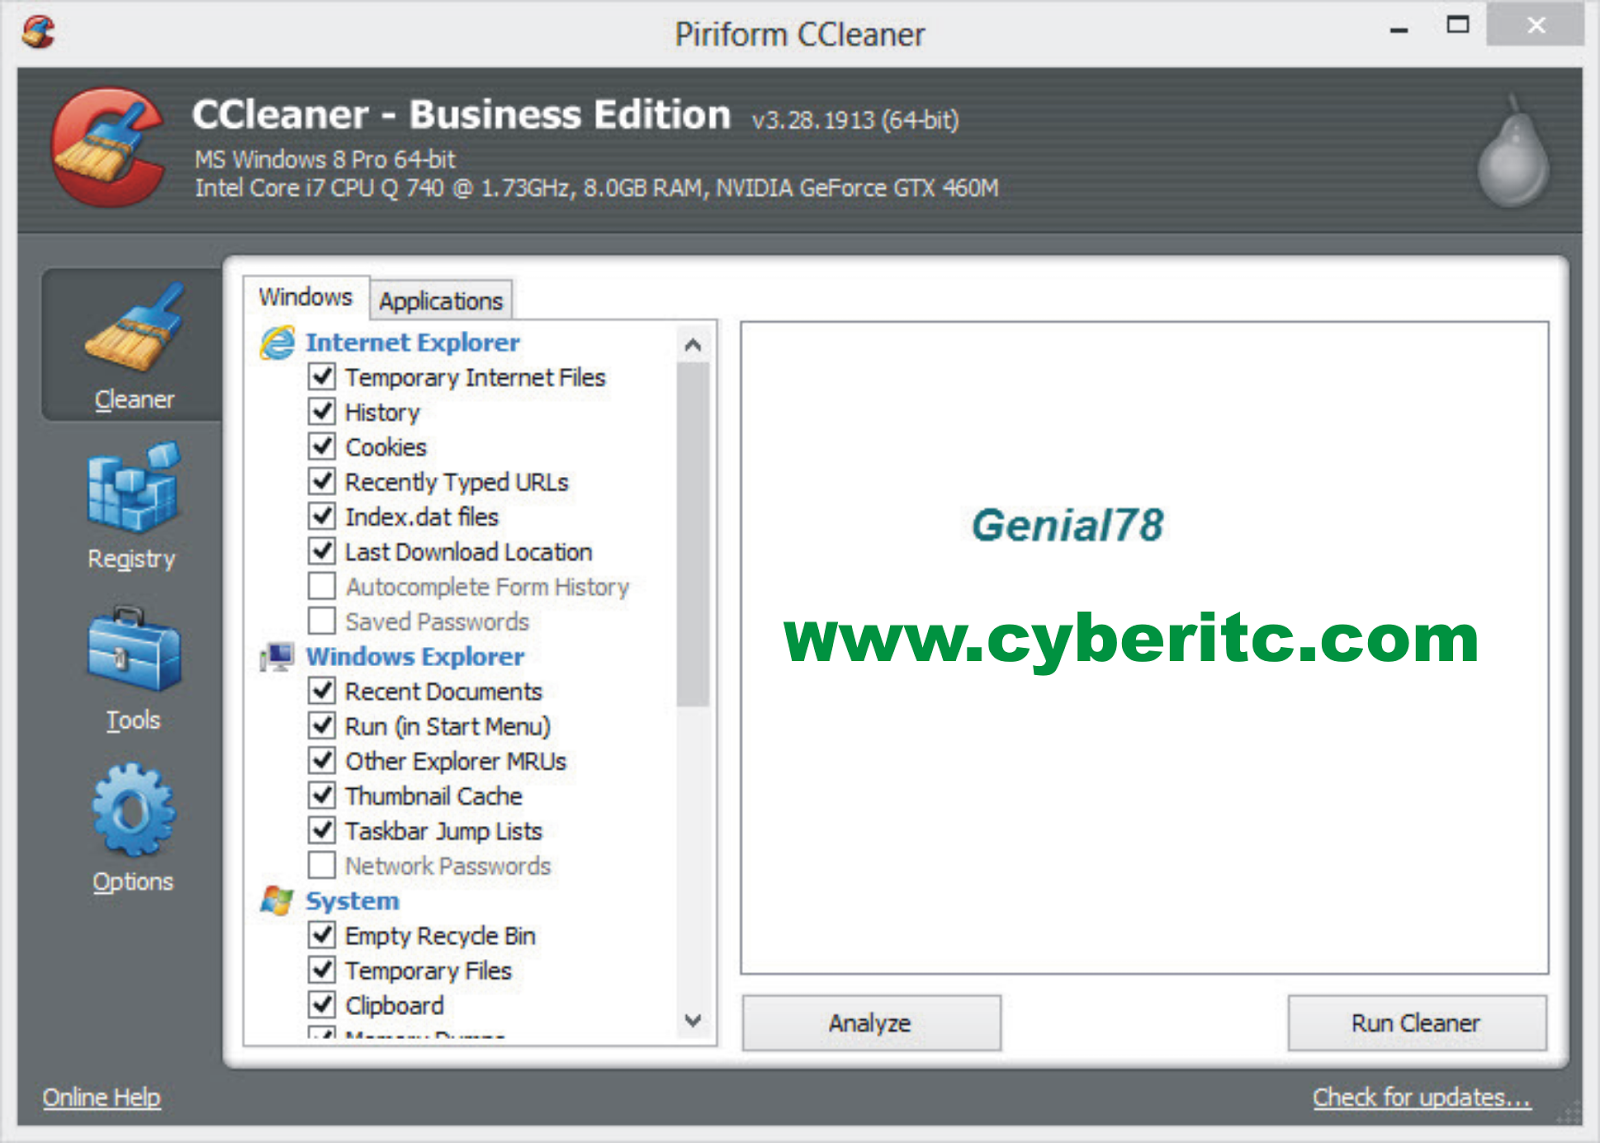 Free ccleaner for windows 10 piriform - Vinyl linux ccleaner 2015 gratuit pour windows 8 40k android chomikuj download